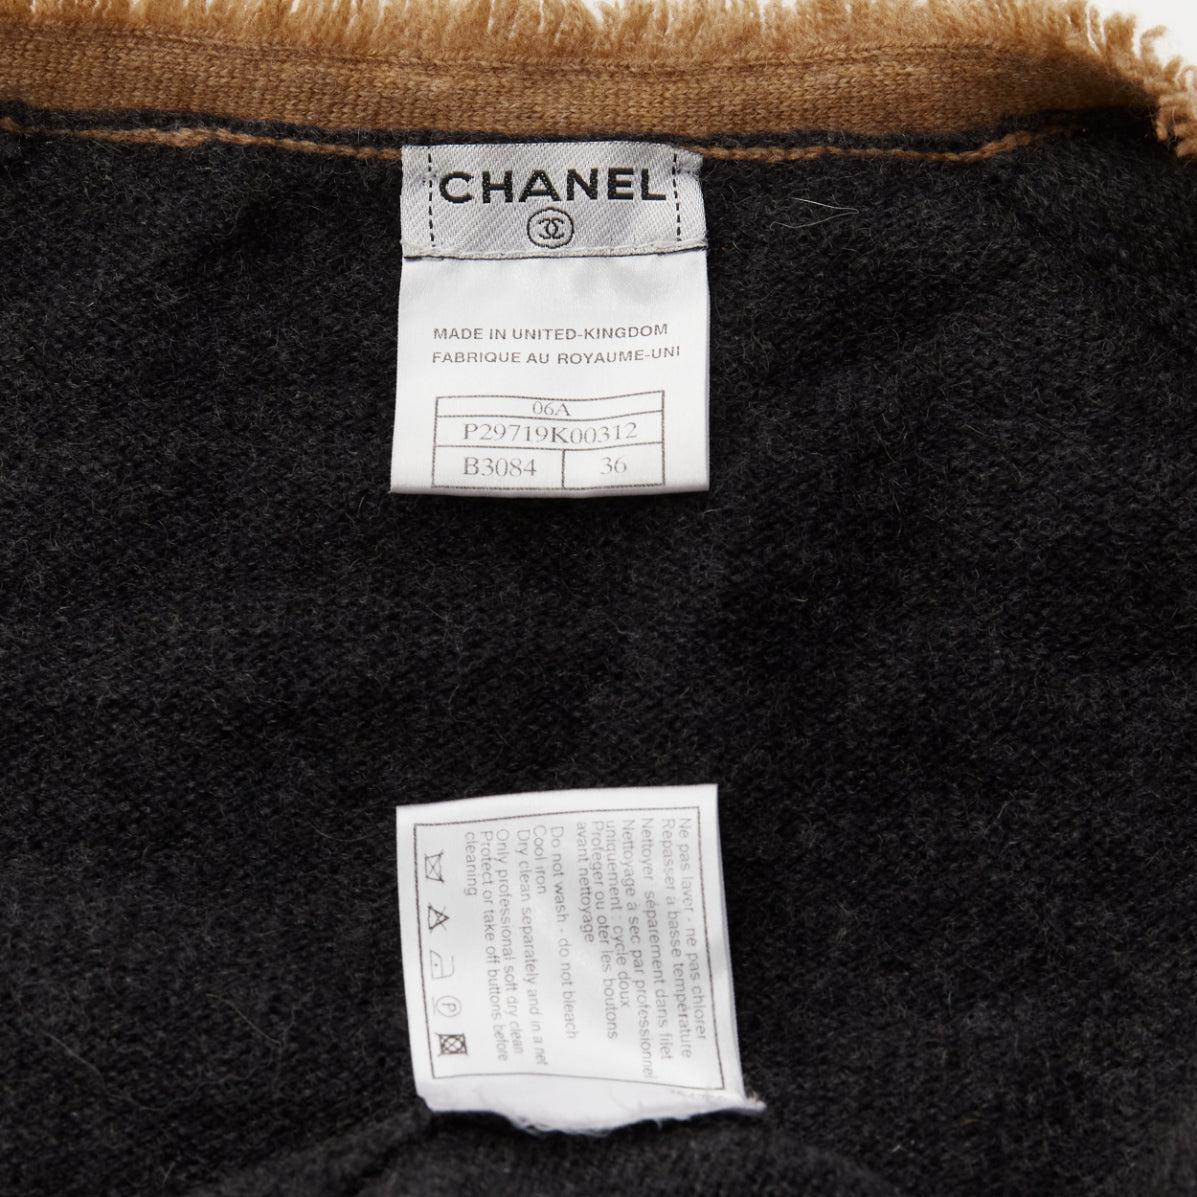 CHANEL 06A Runway 100% cashmere tan grey 4 pocket CC logo belted cardigan FR36 S For Sale 5